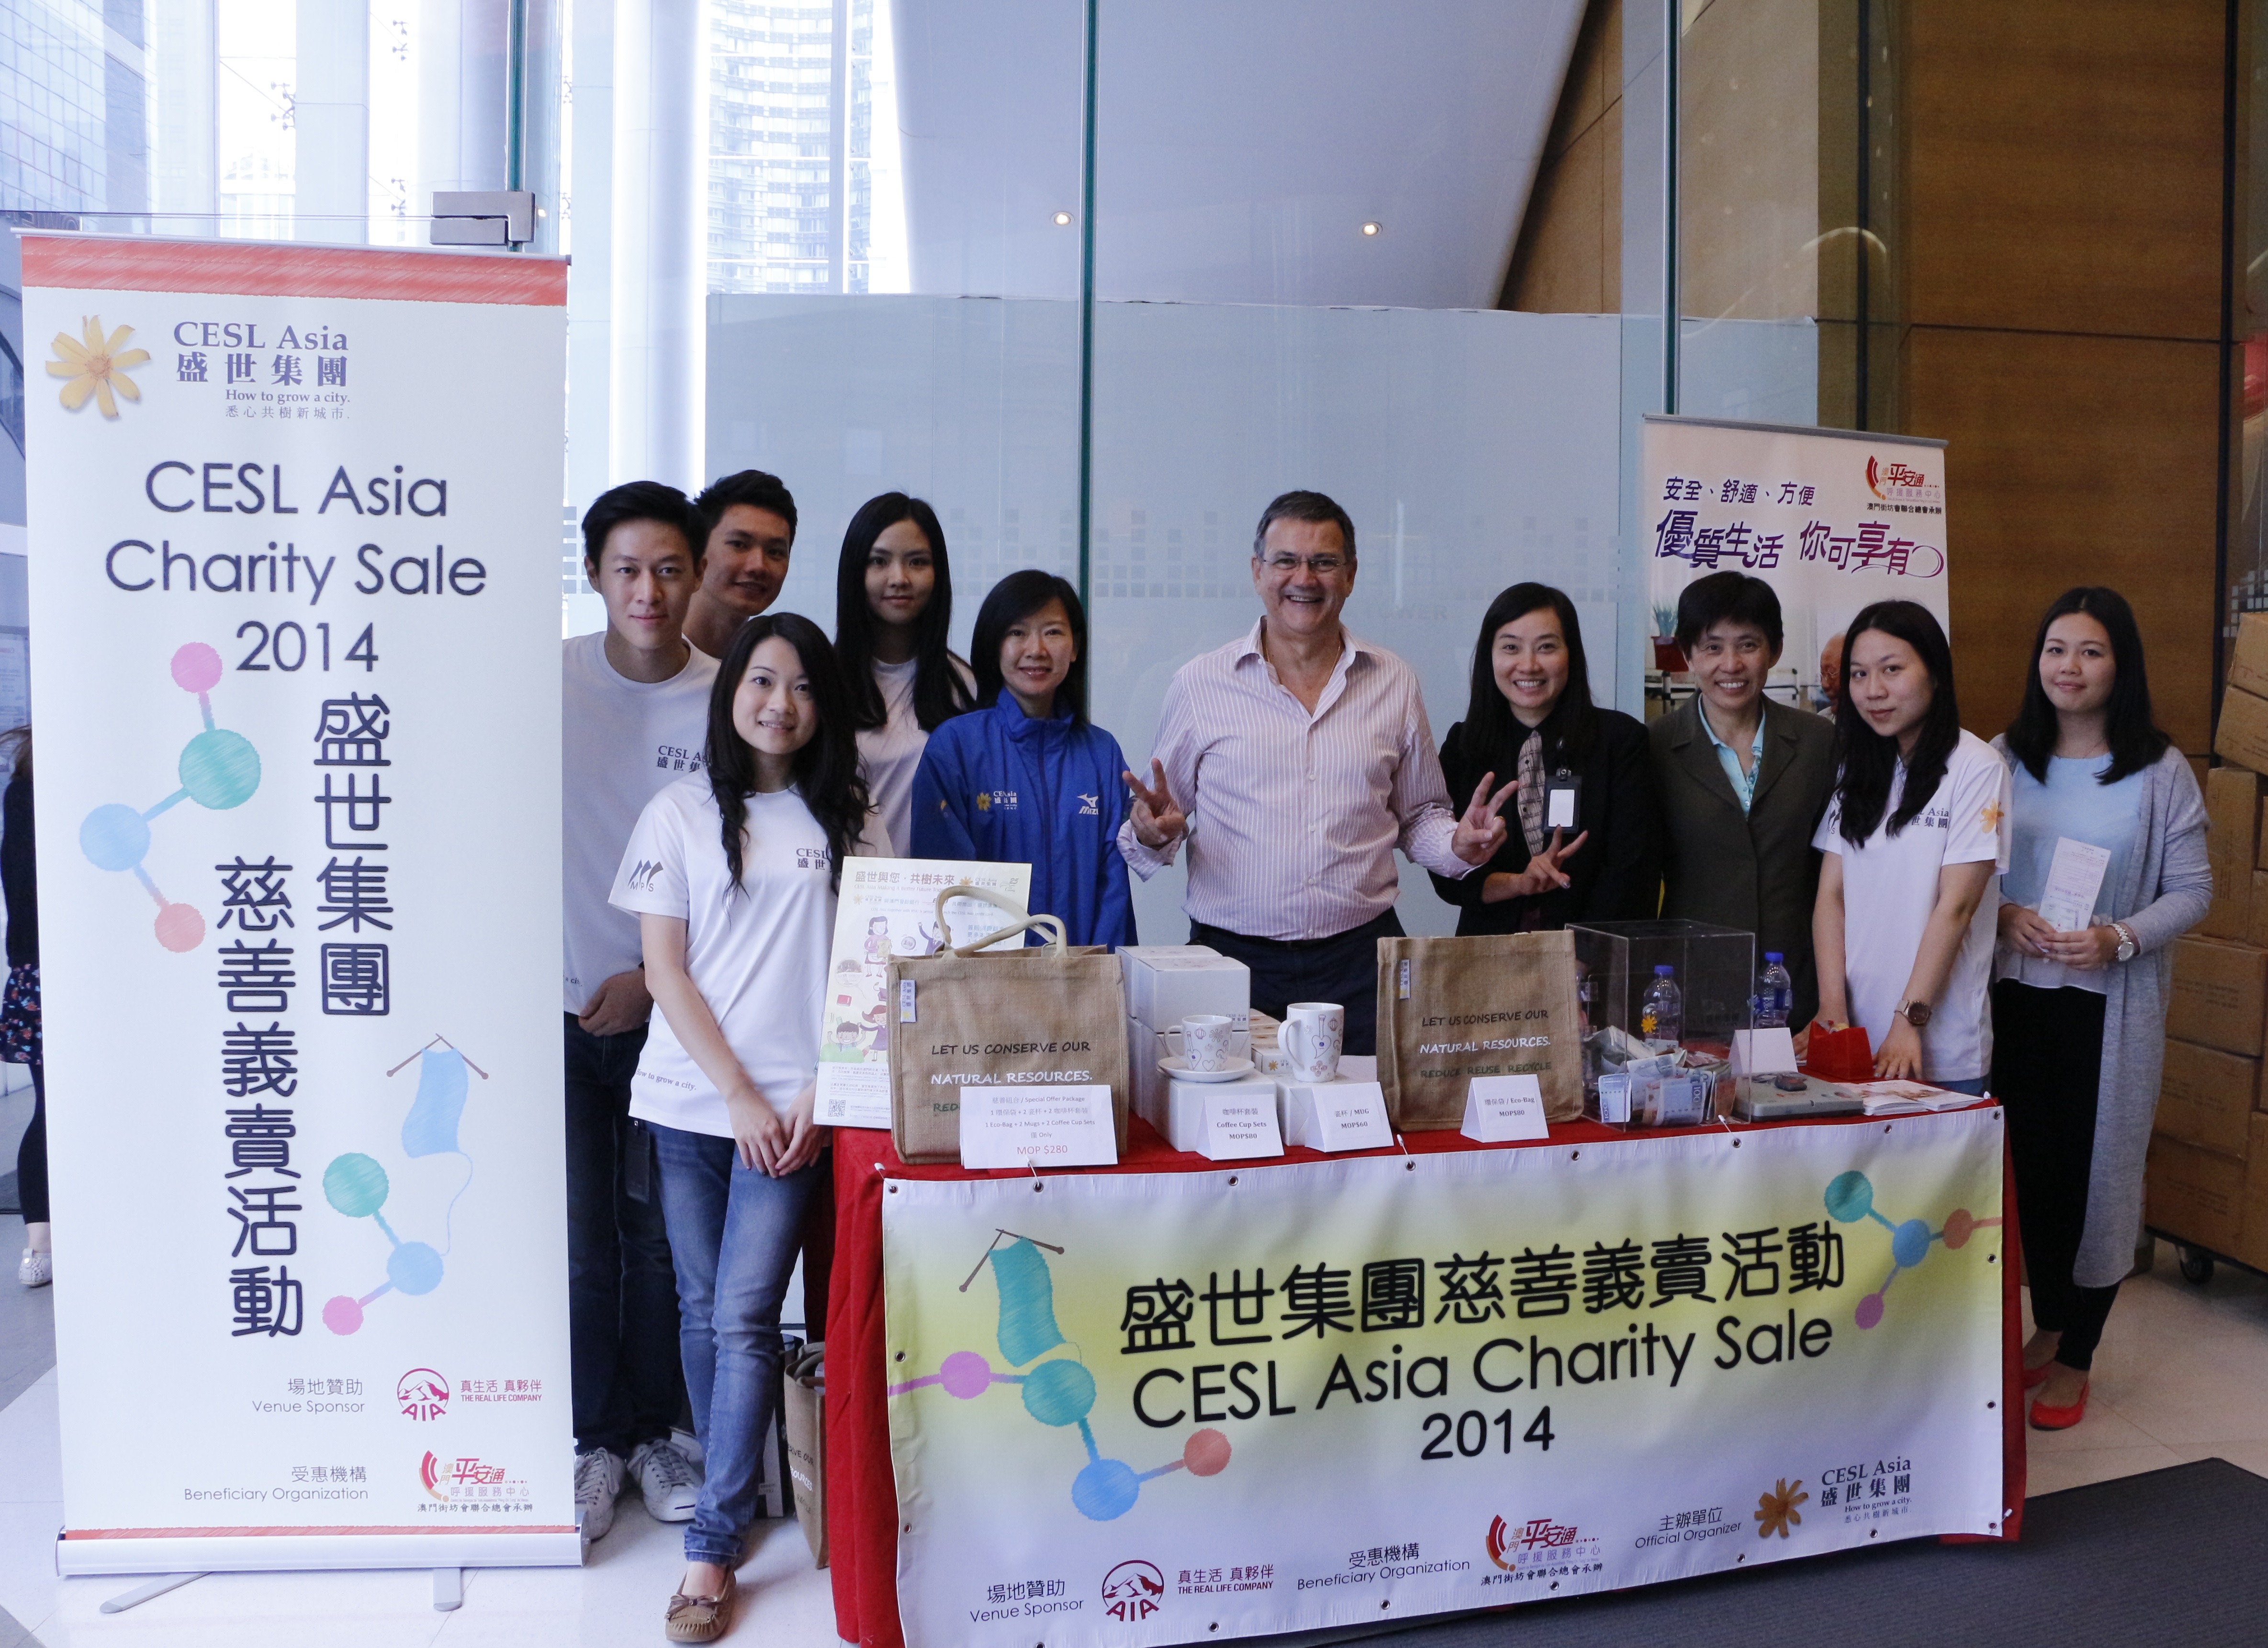 CESL Asia Charity Sale 2014 (2014/10/10)